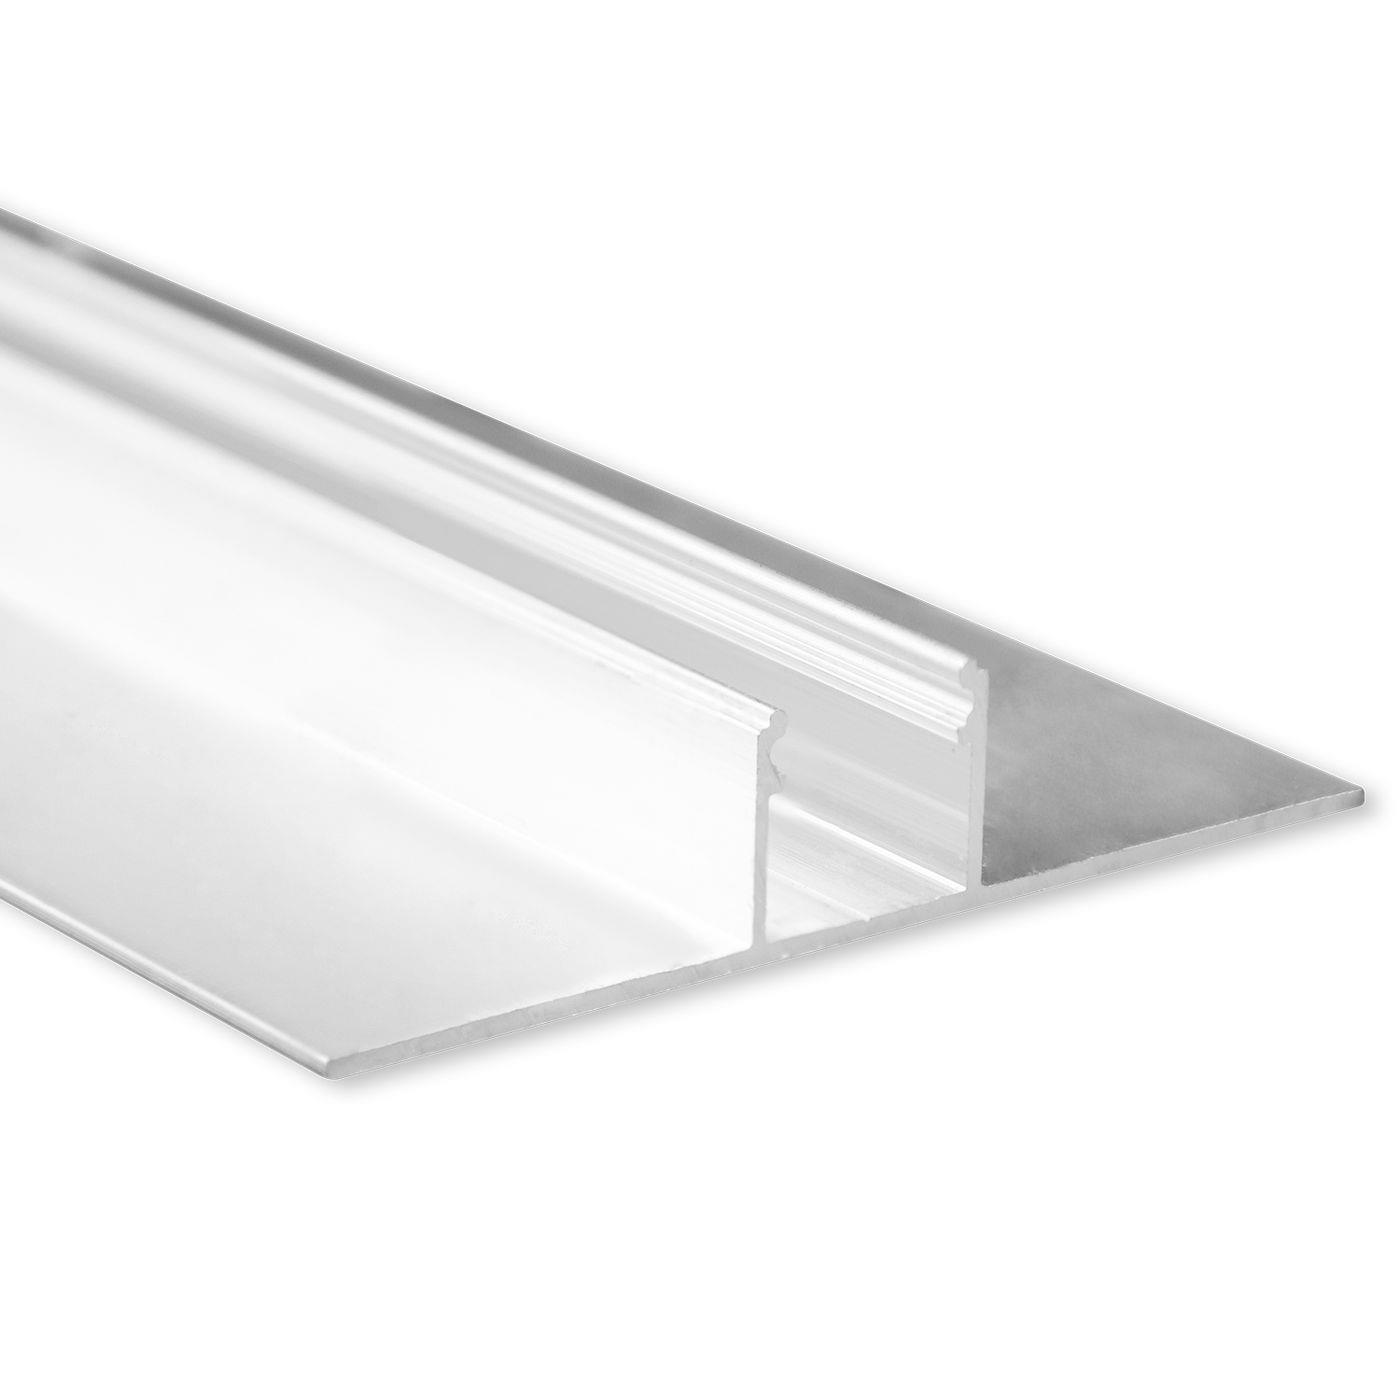 2m LED profile TBP3 Silver 77x14,5mm Aluminium Drywall profile for 14mm LED strips